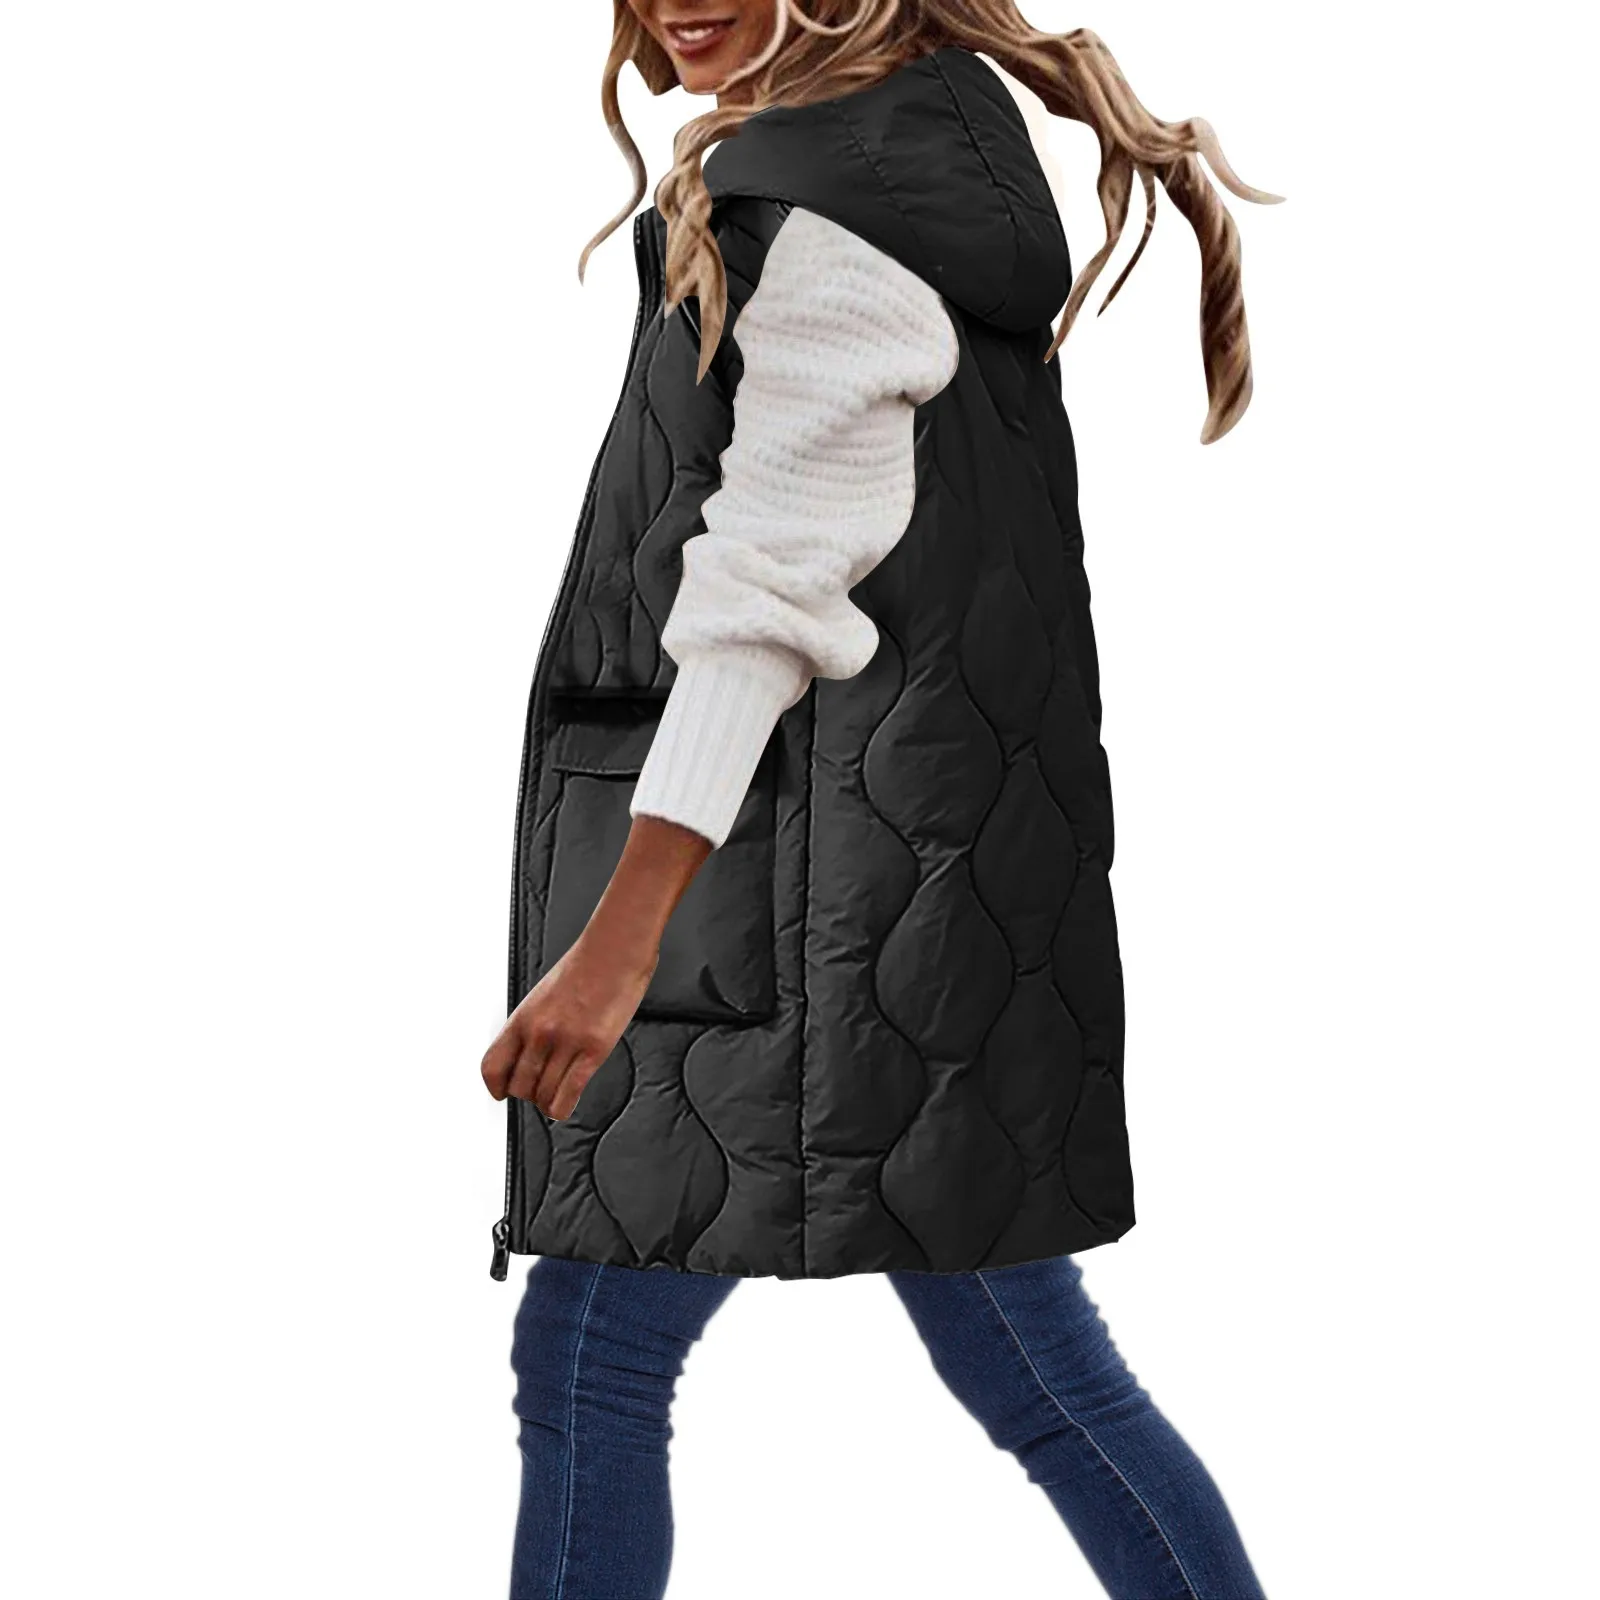 Winter Warm Medium Length Vestes Women's Sleeveless Hooded Vests Coat Ladies Loose Pockets Casual Zipper Jacket Waistcoat Female